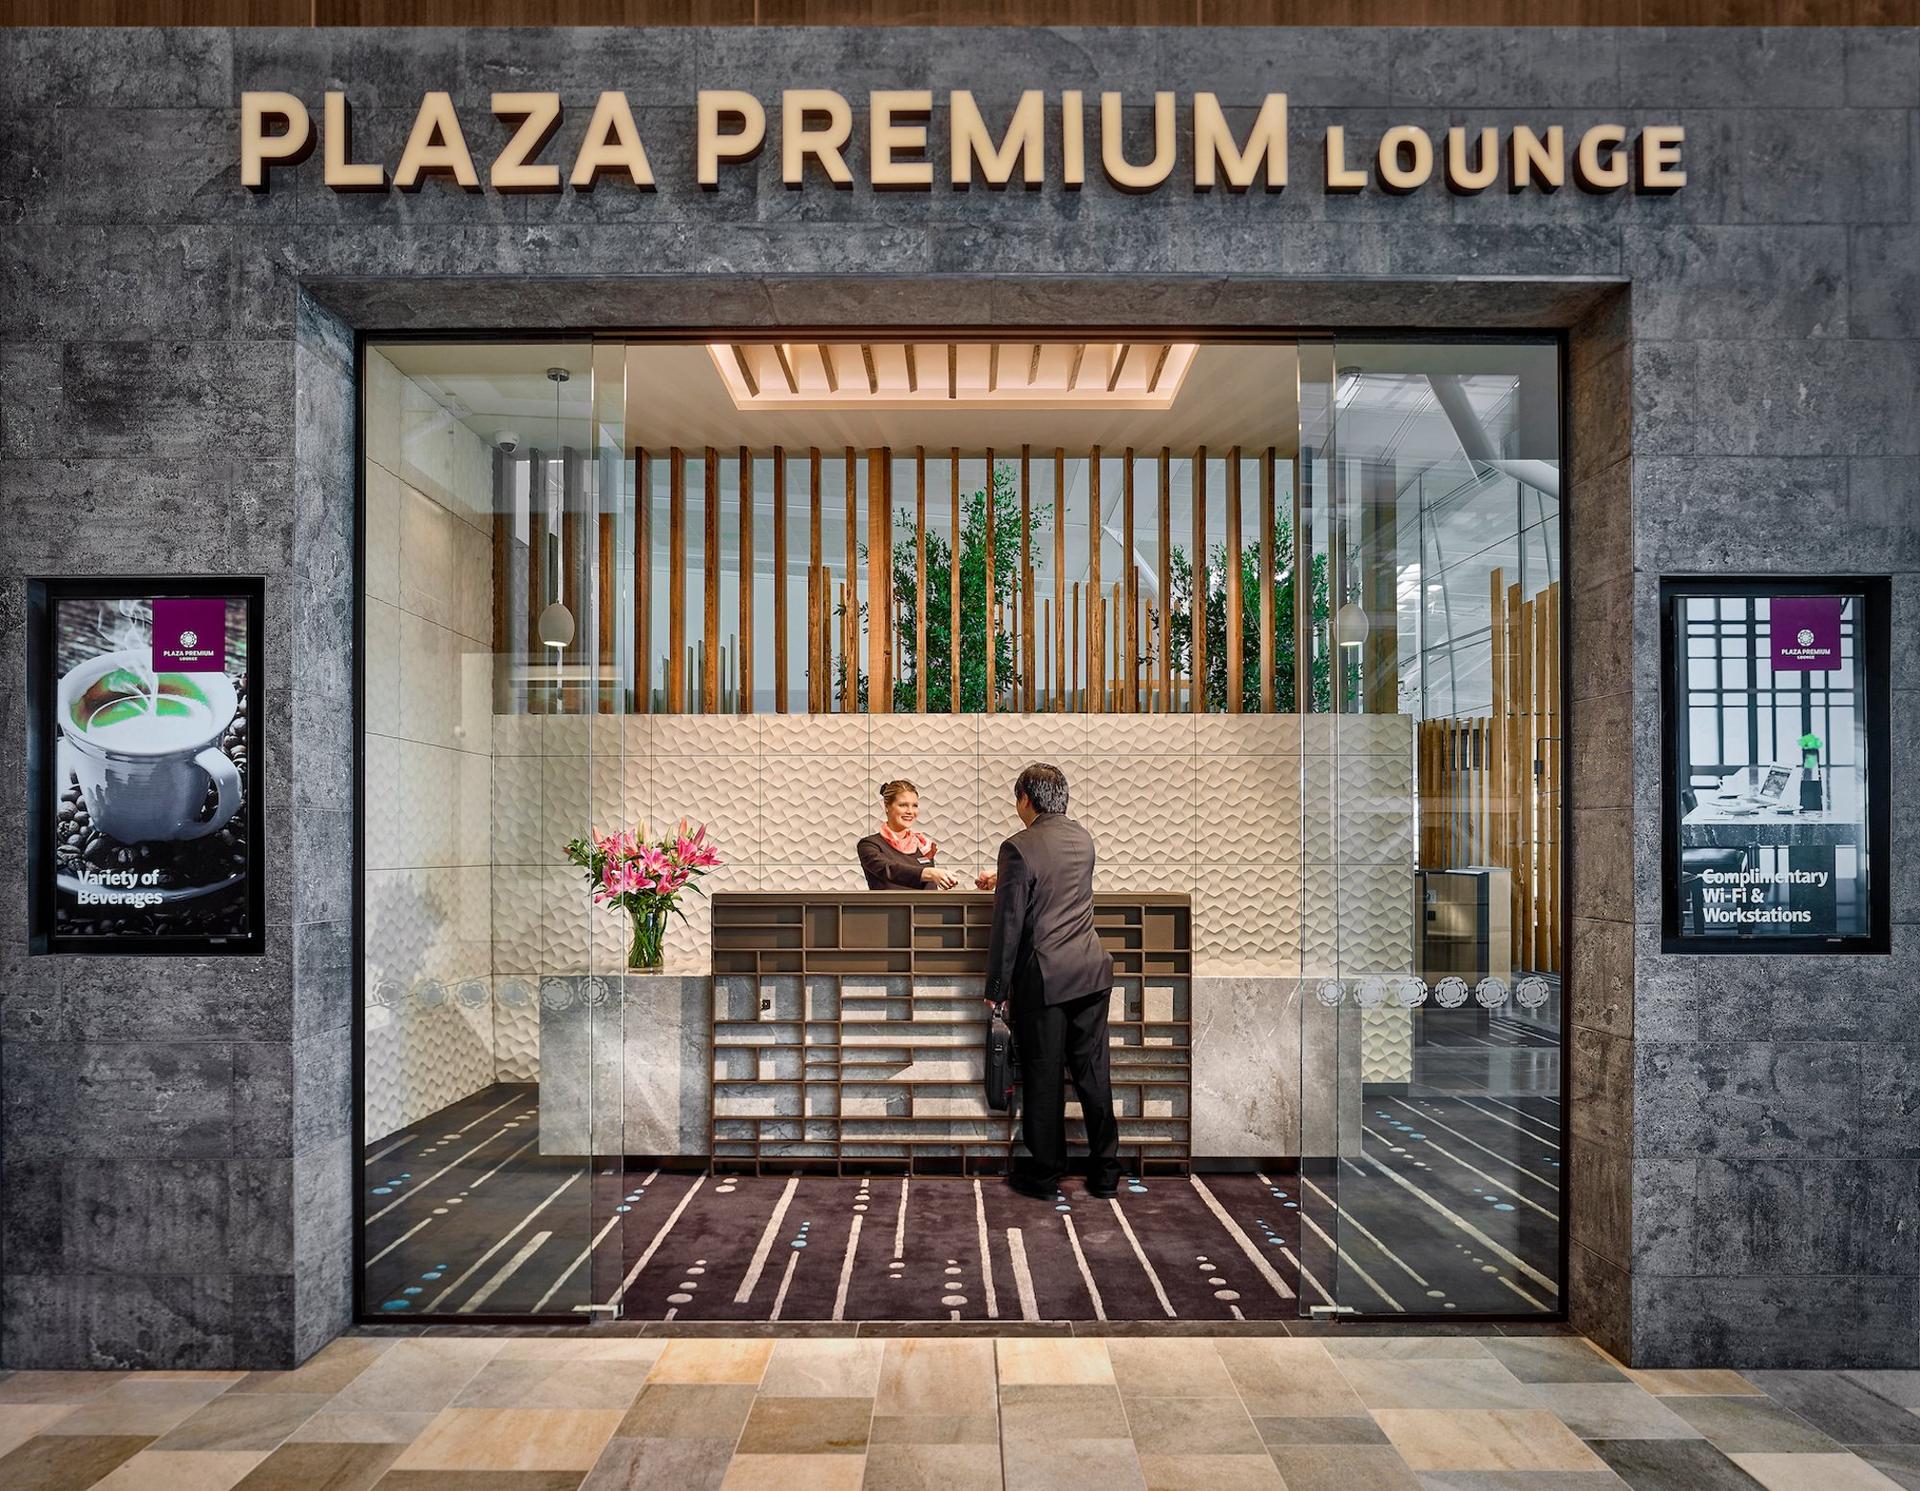 Plaza Premium Lounge image 2 of 23